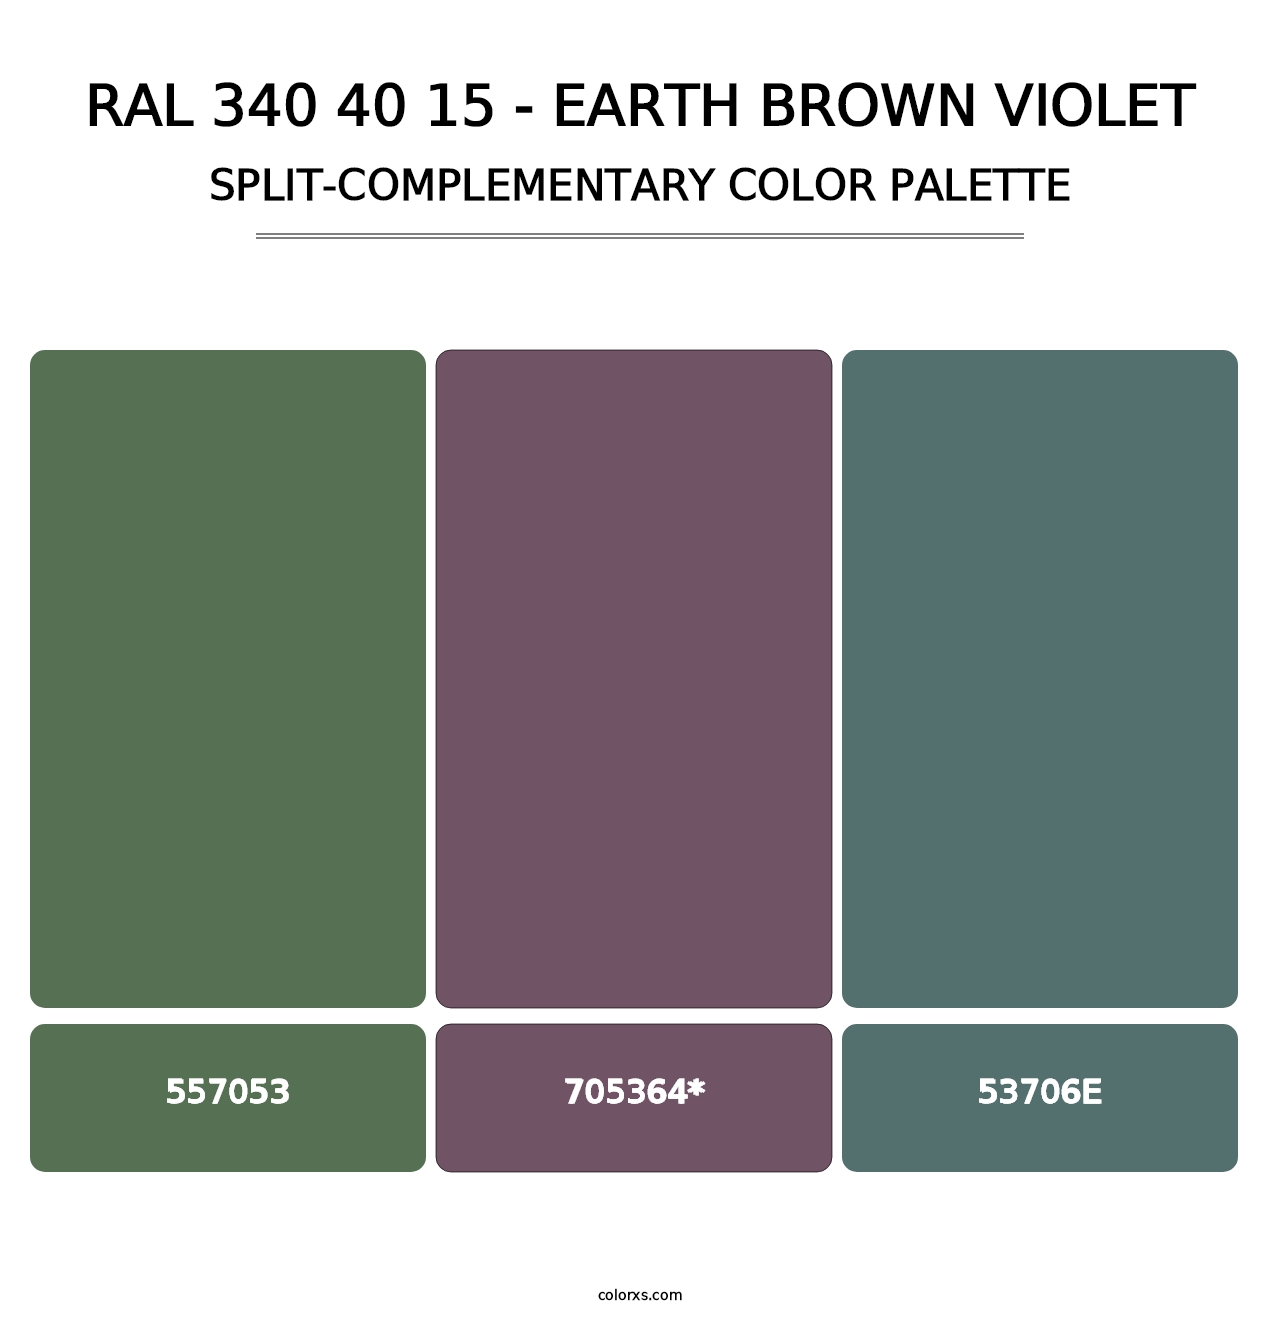 RAL 340 40 15 - Earth Brown Violet - Split-Complementary Color Palette